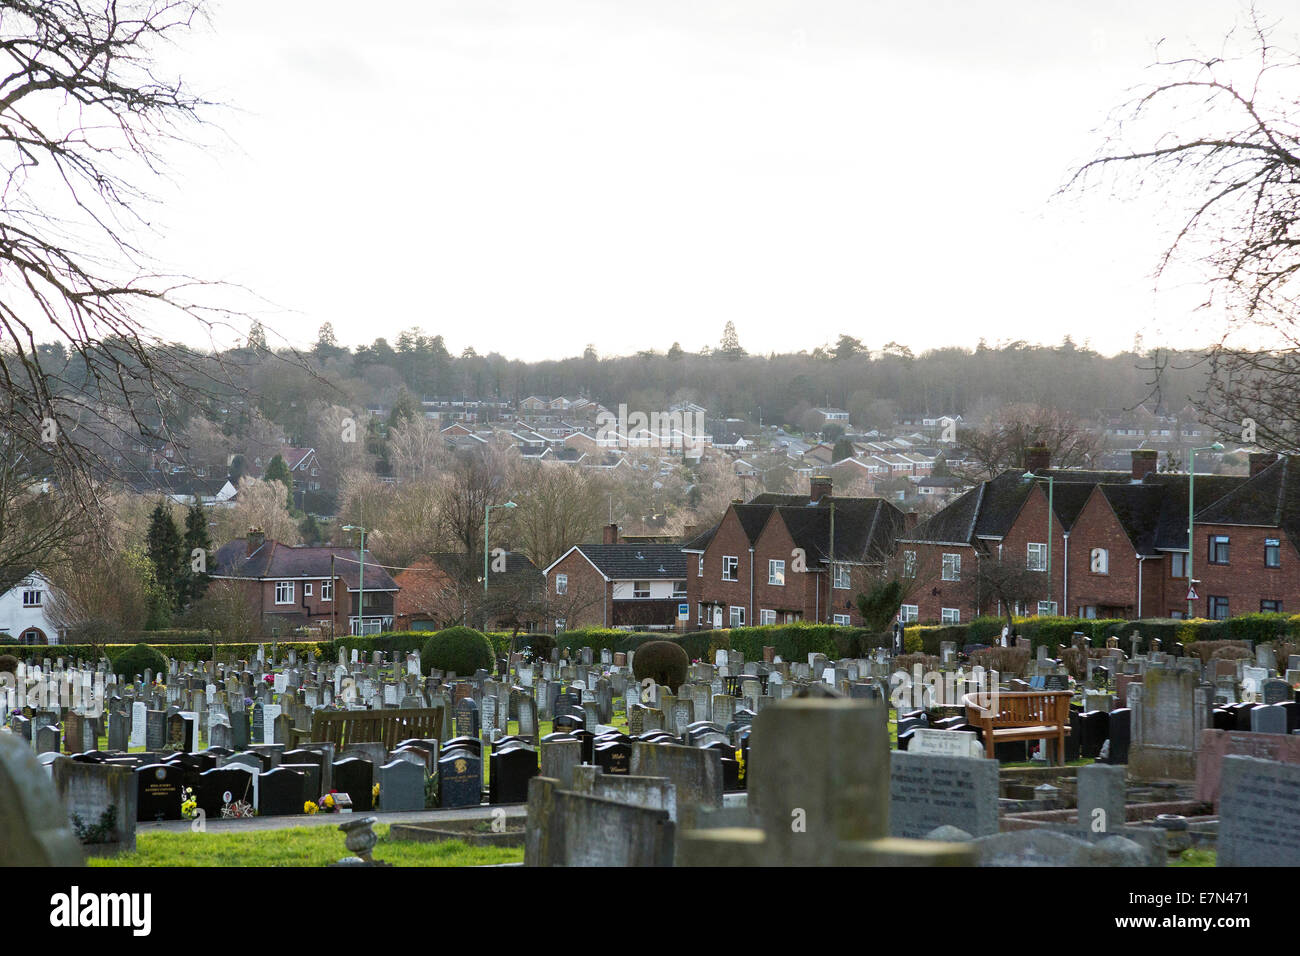 Cemetery in the UK Stock Photo